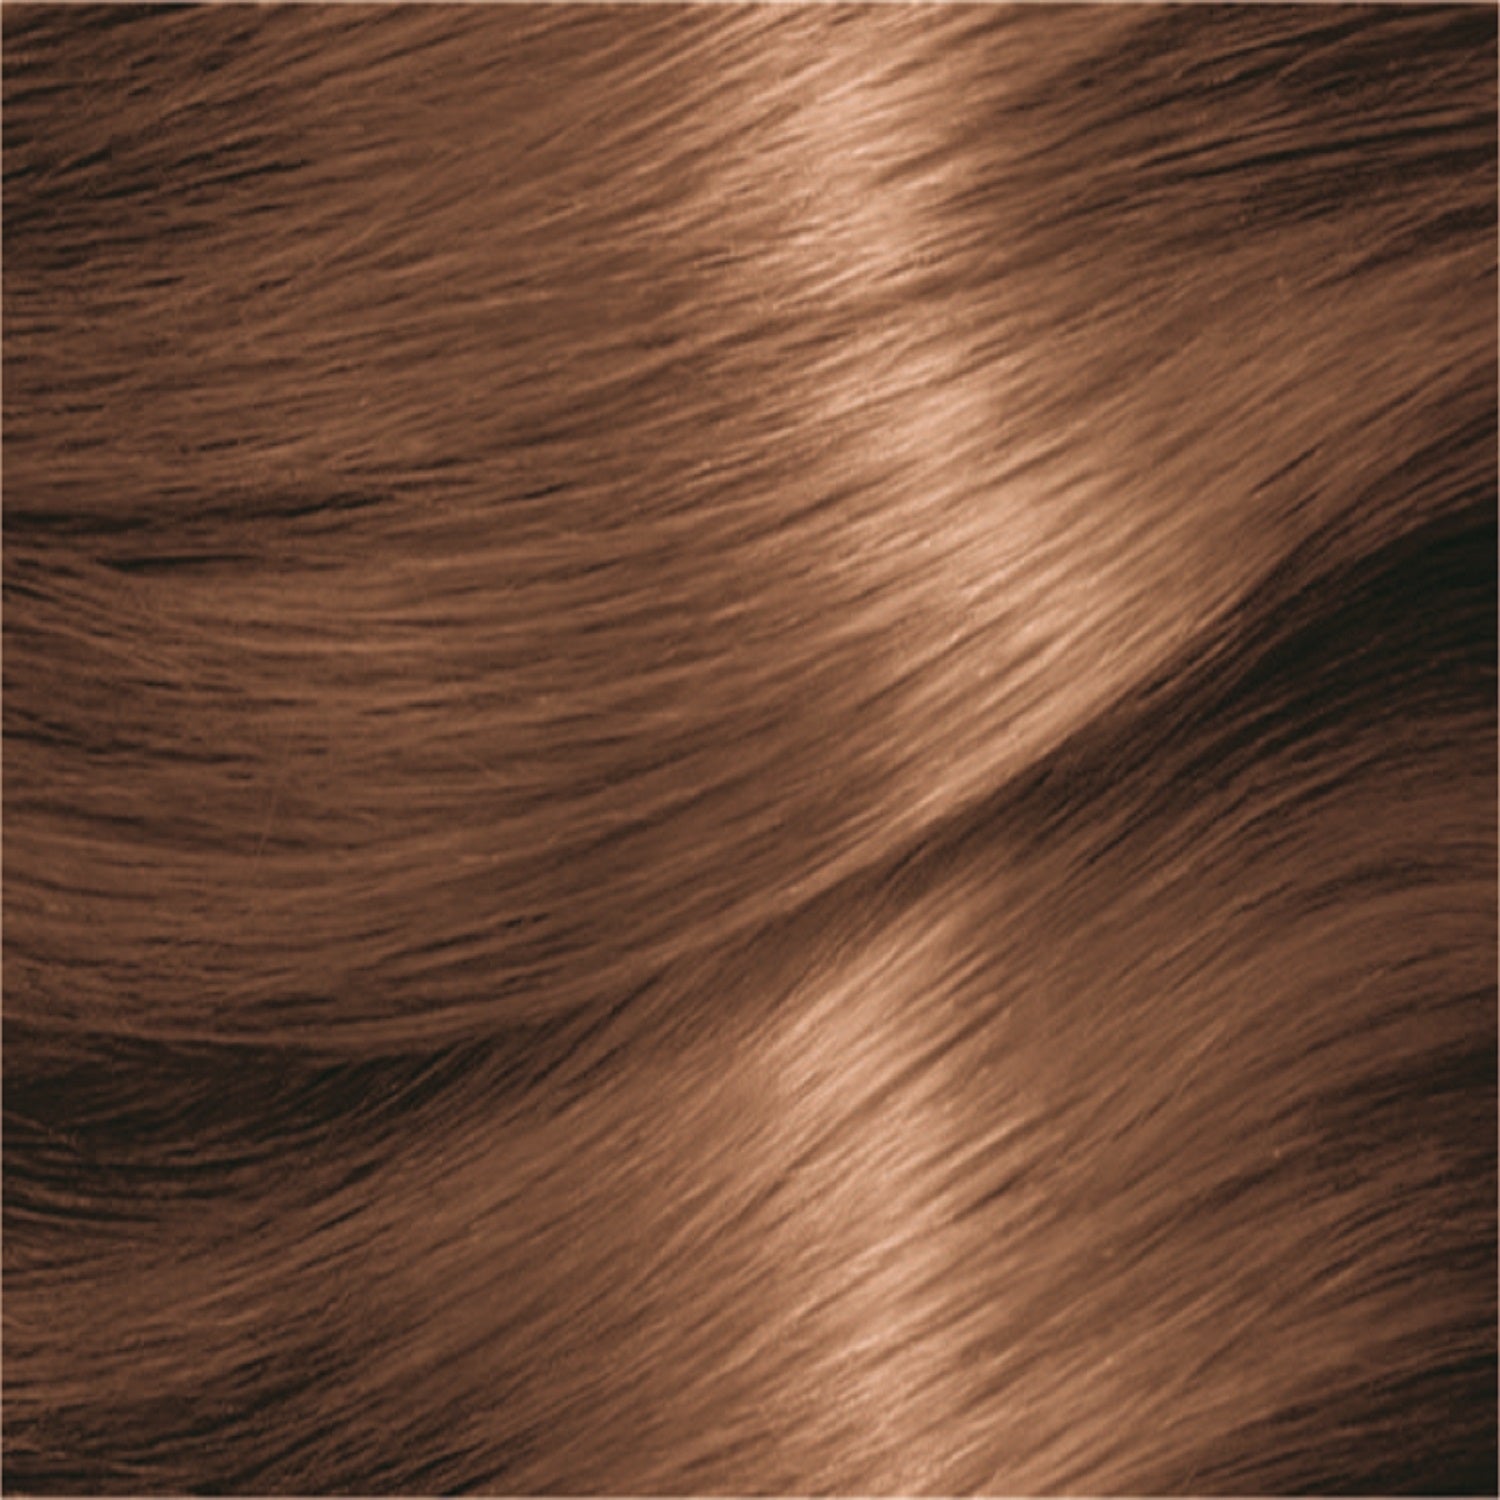 Garnier Hair Color Nutrisse Nourishing Creme, 93 Light Golden Blonde (Honey  Butter) Permanent Hair Dye, 2 Count (Packaging May Vary) in Saudi Arabia |  Whizz Hair Color